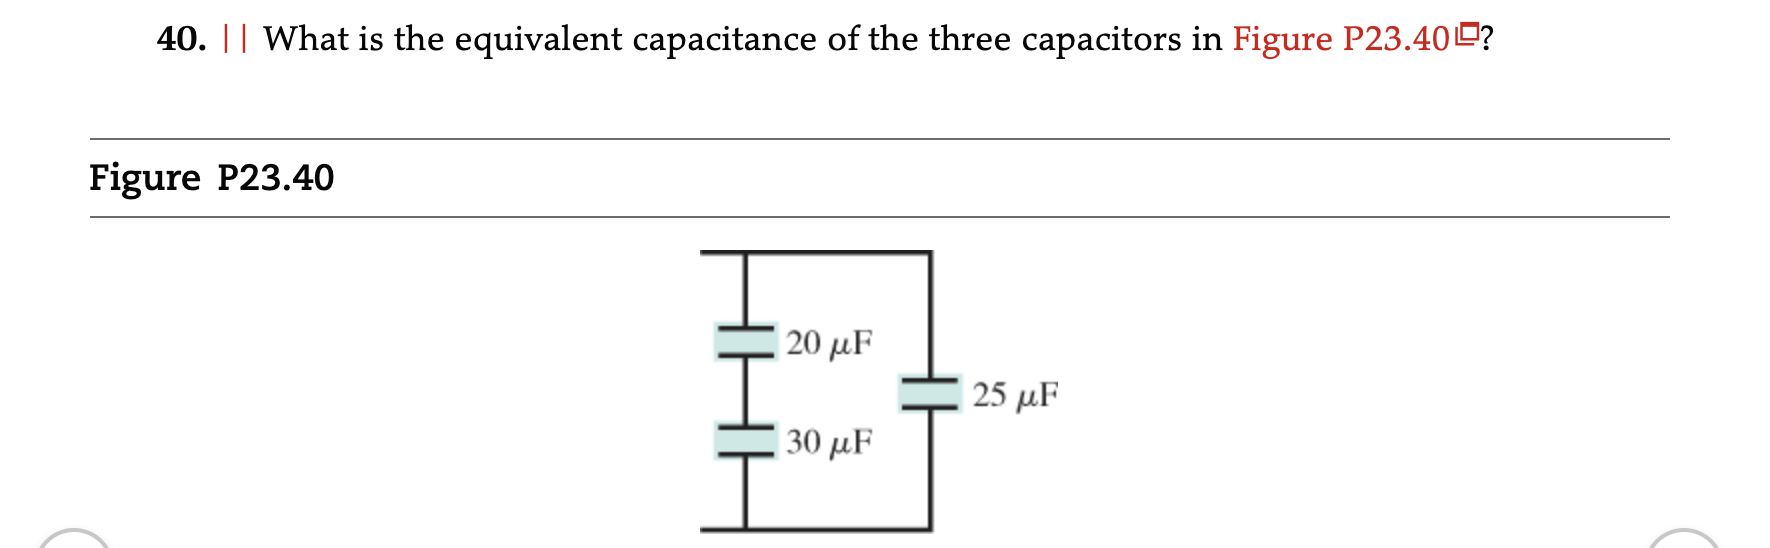 40. || What is the equivalent capacitance of the three capacitors in Figure P23.400?
Figure P23.40
20 uF
HHH
25 uf
30 uF